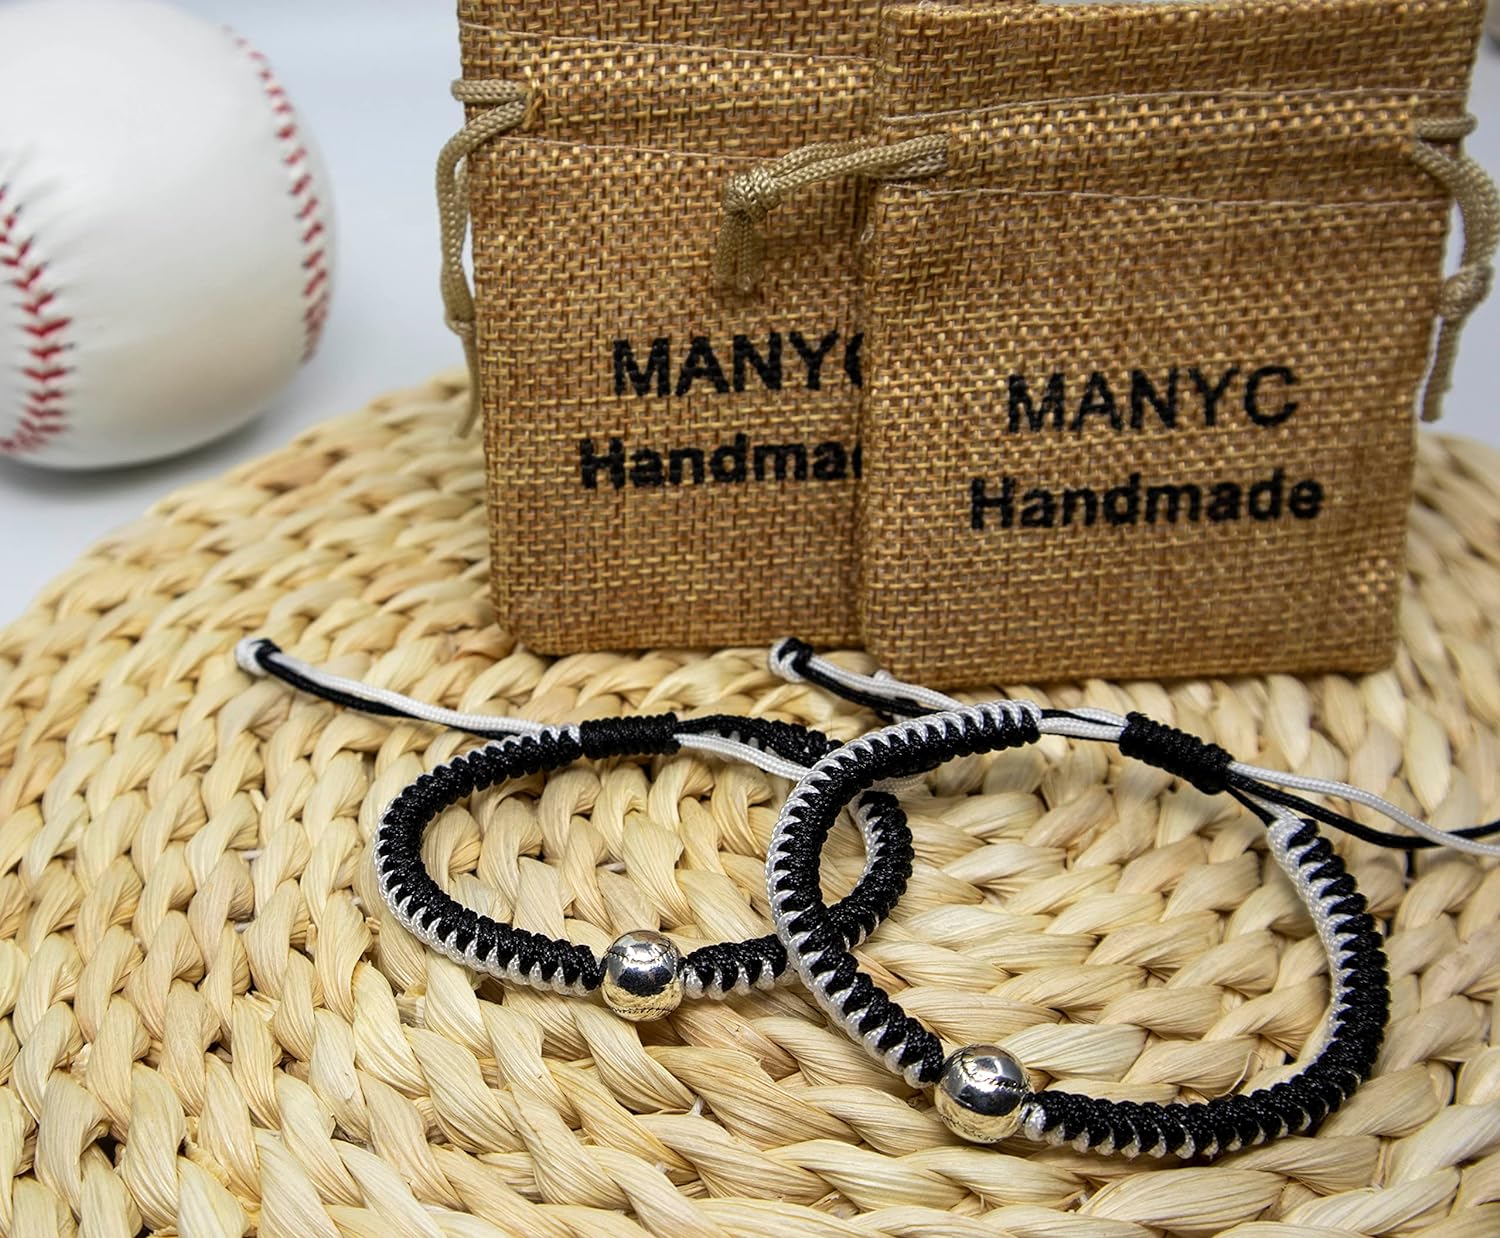 Braided Bracelets Baseball Gifts for Boys Adjustable Wristbands with Baseball Beads, Inspirational Baseball Bracelets for Girls Teens Adults (Black 2PCS)